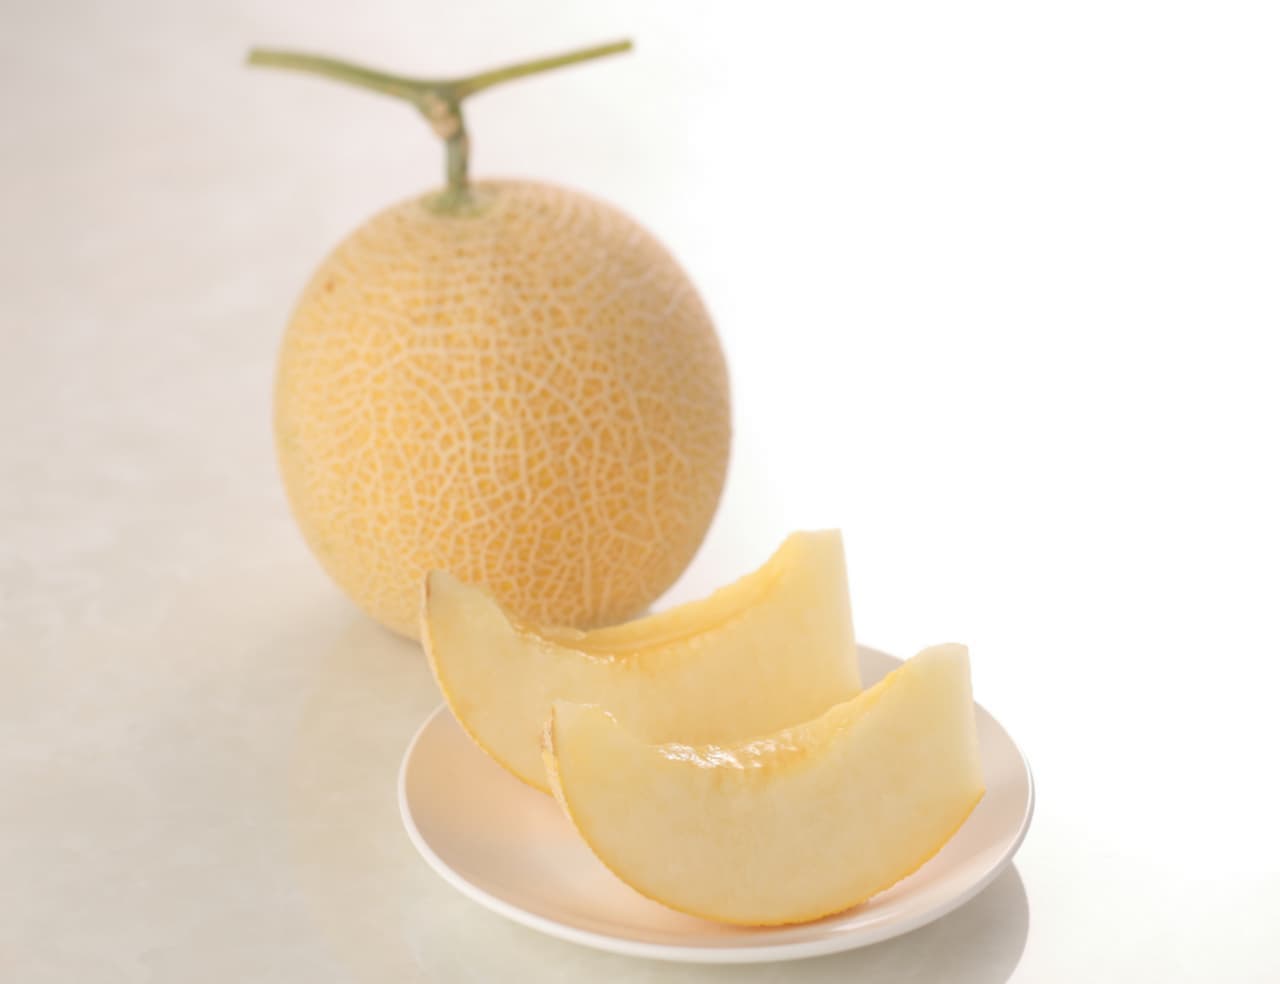 Kilfebbon "Golden Pearl" Melon Tart from Shimane Prefecture